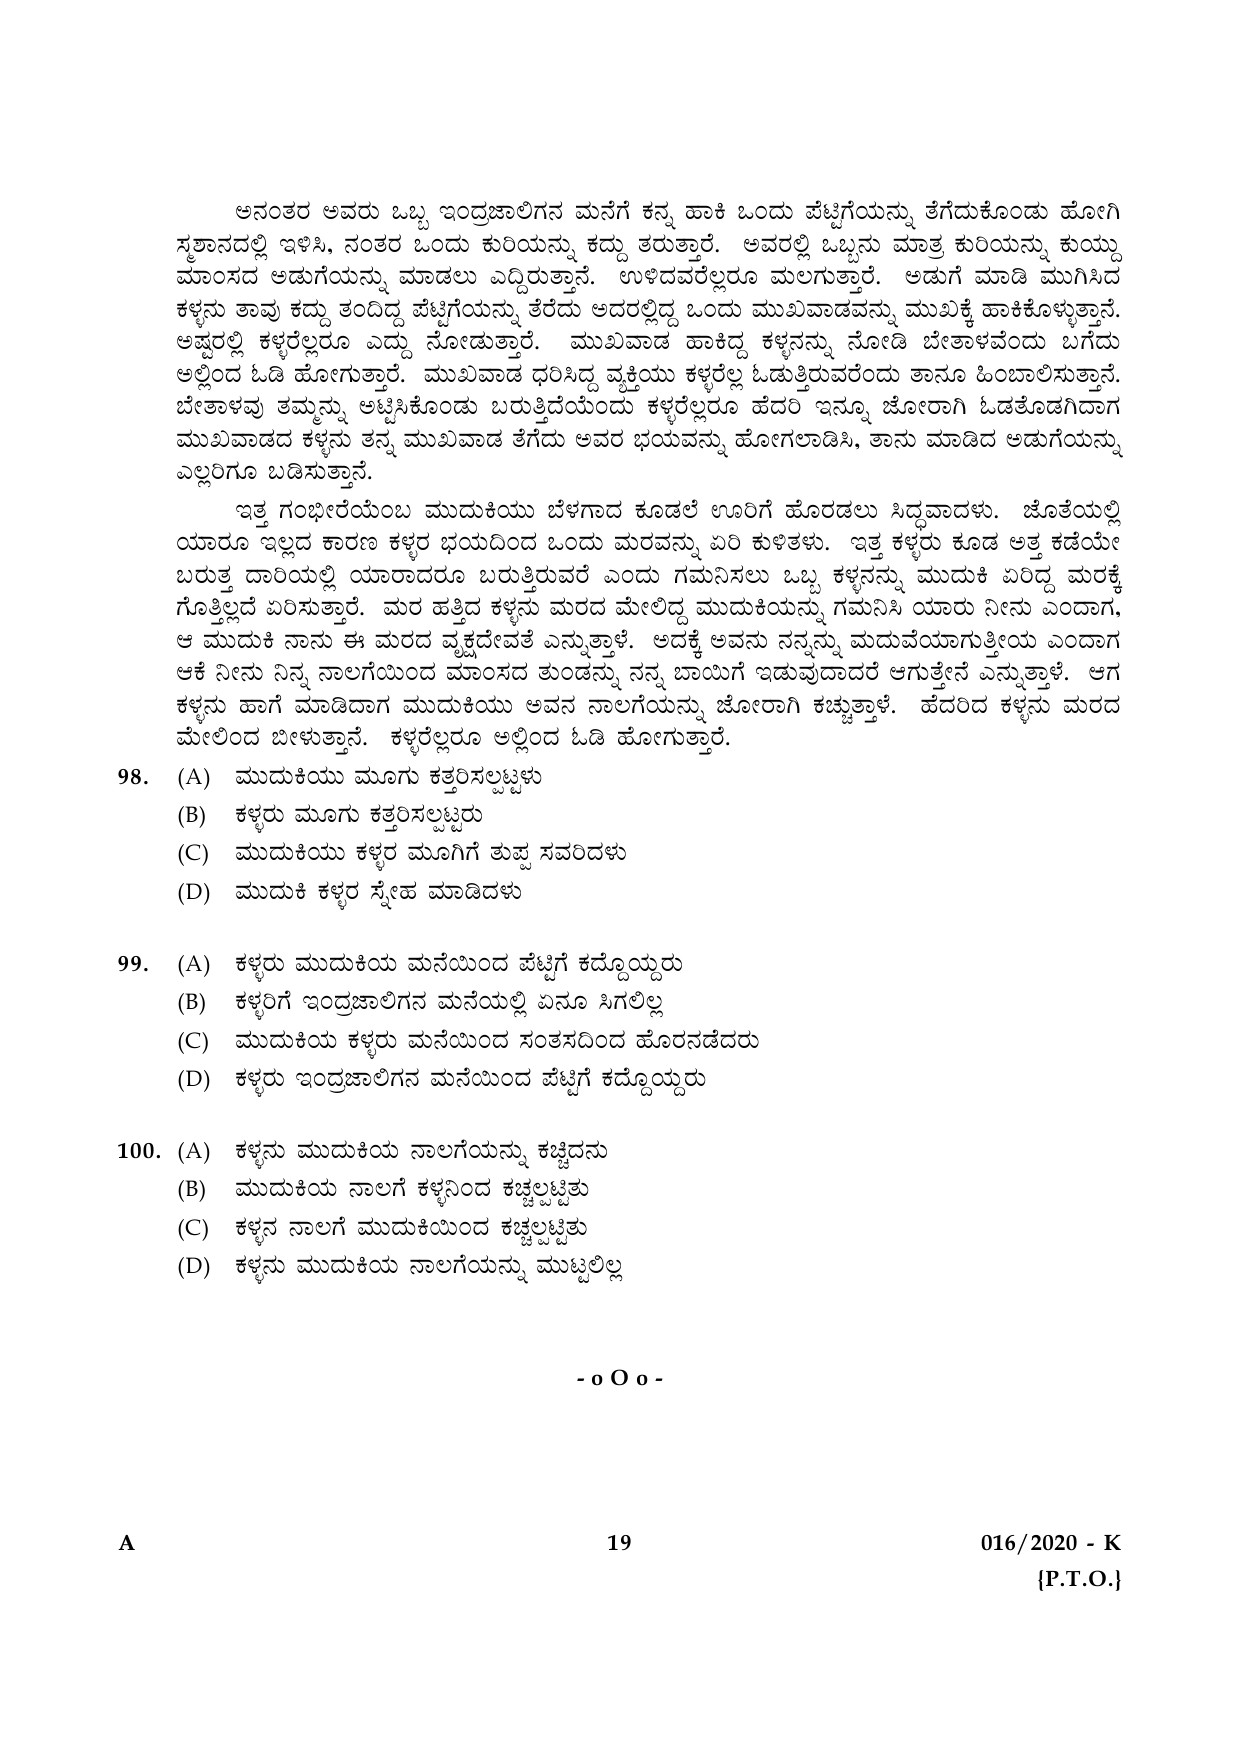 KAS Officer Trainee Kannada Exam 2020 Code 0162020 18